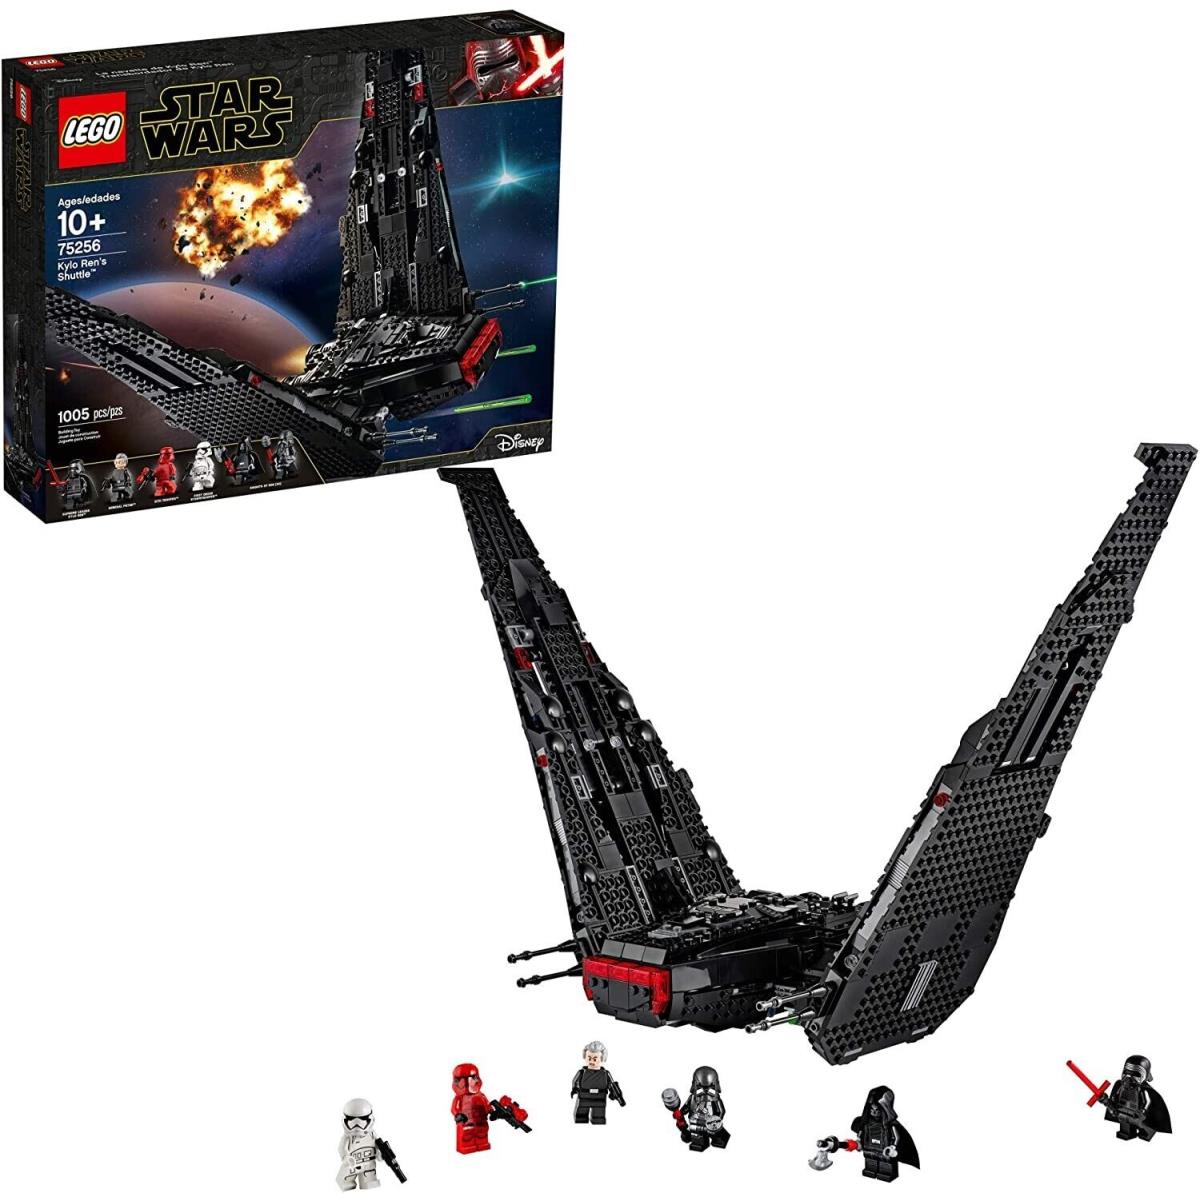 Lego Star Wars: The Rise of Skywalker Kylo Ren s Shuttle 75256 1 005 Pieces